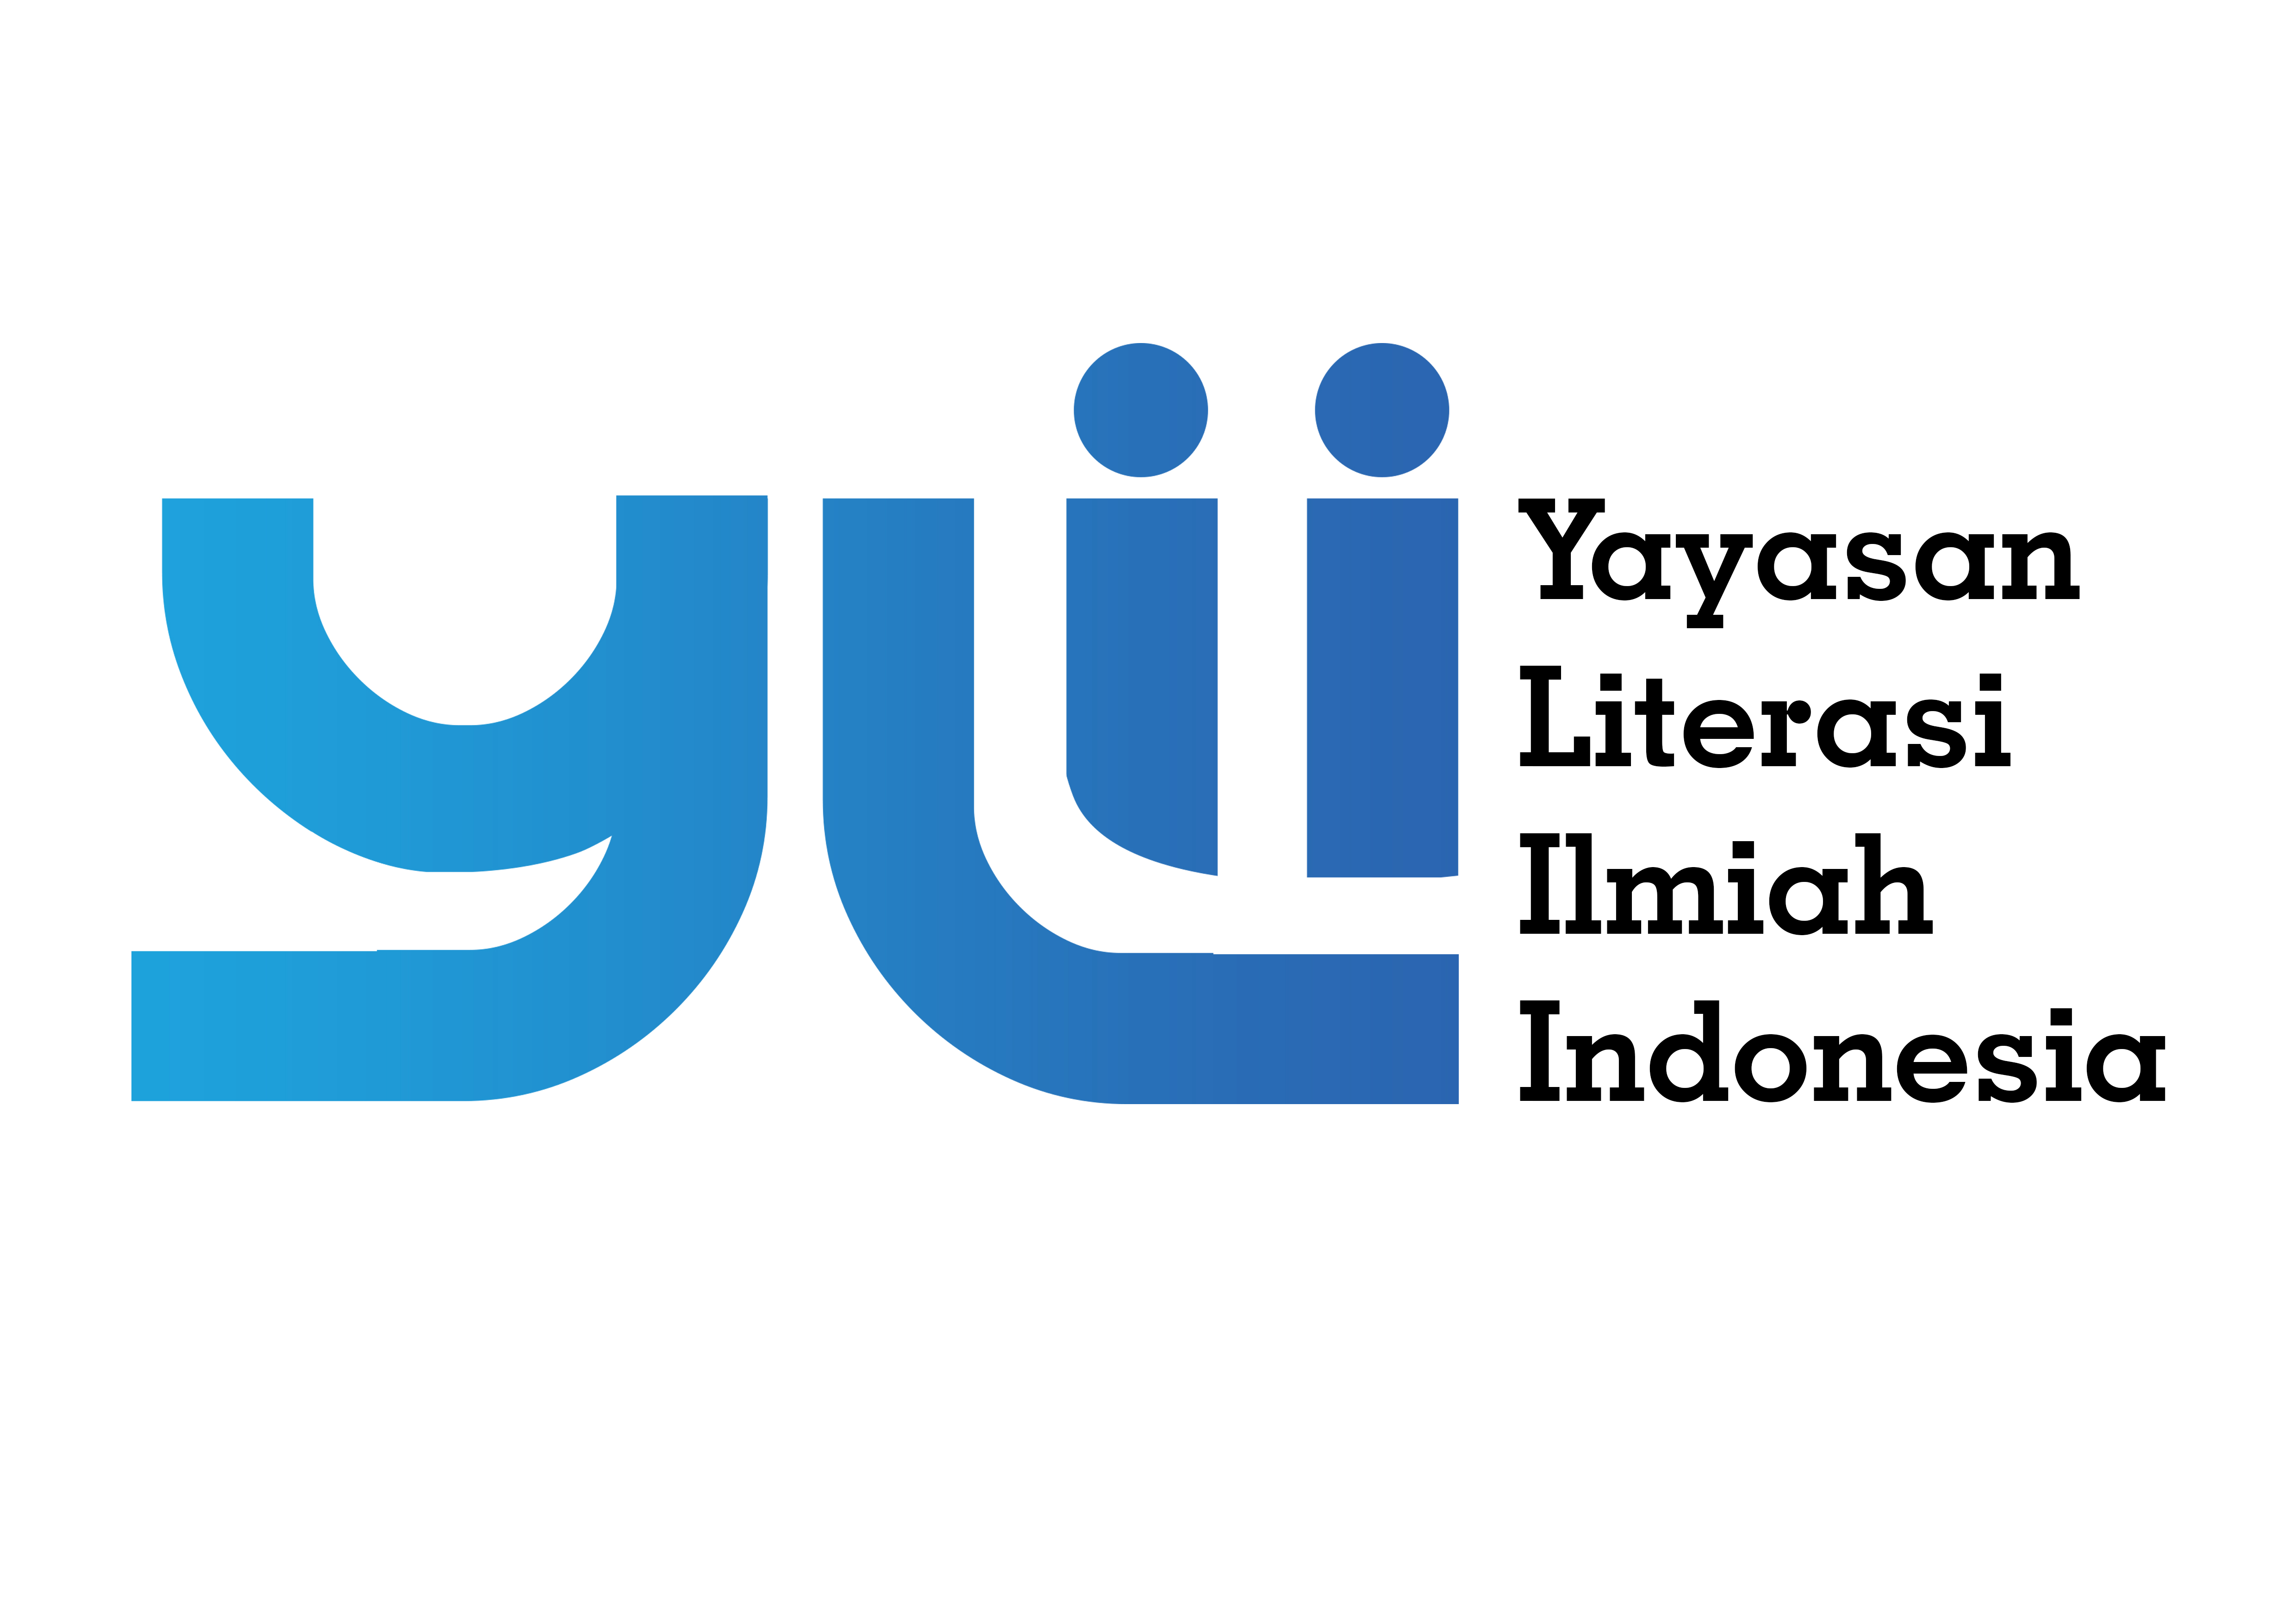 Yayasan Literasi Ilmiah Indonesia